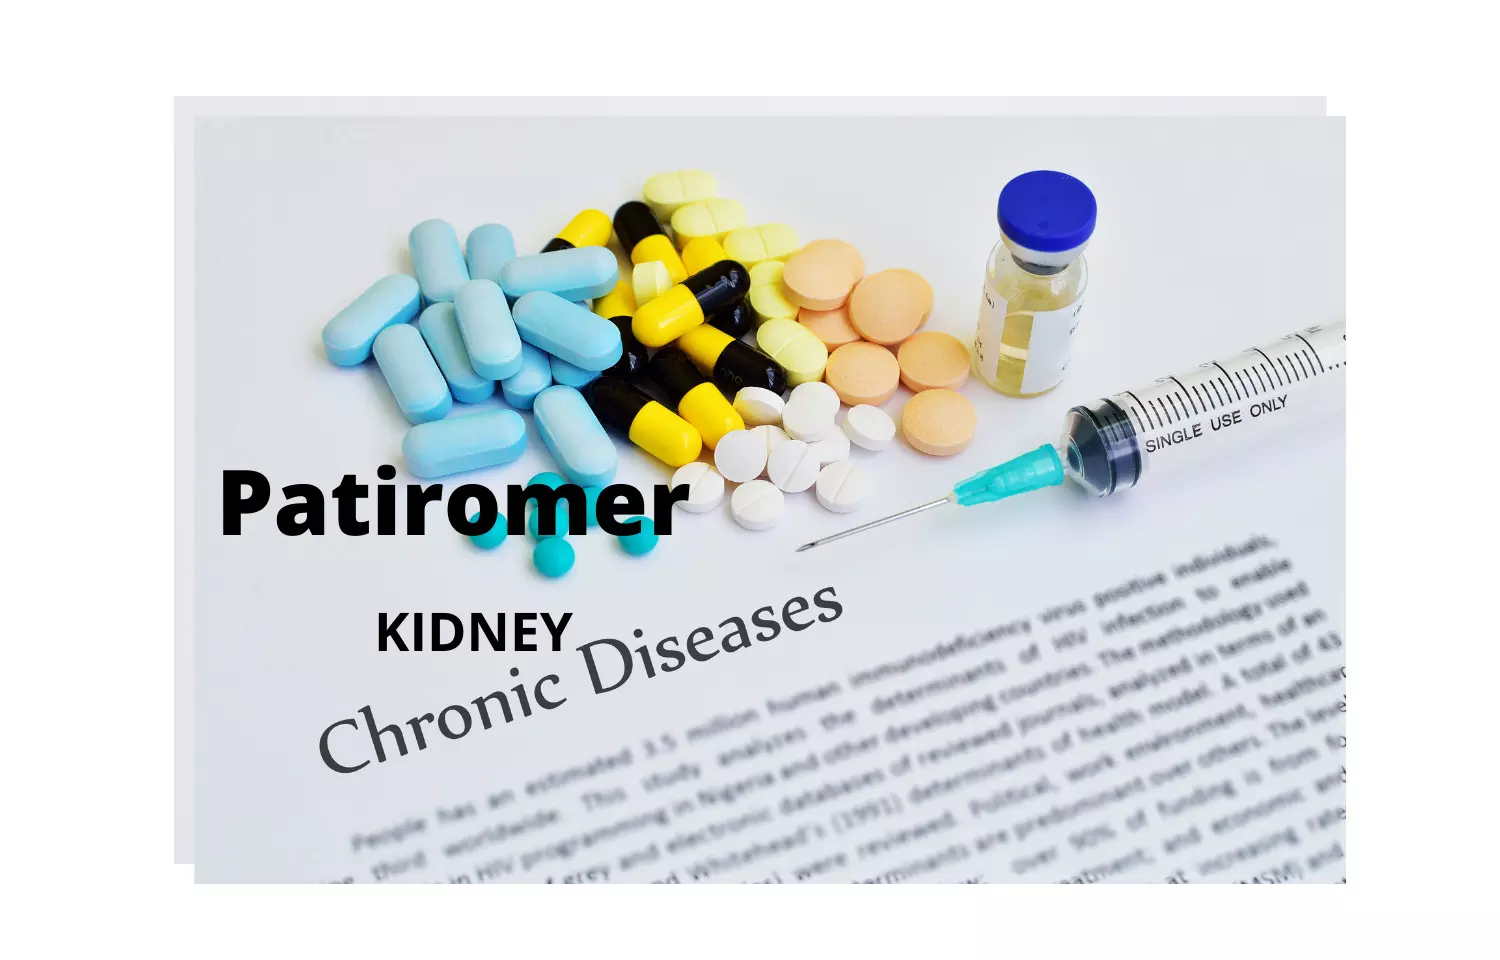 Patiromer prolongs use of spironolactone independently of diabetes status: Study